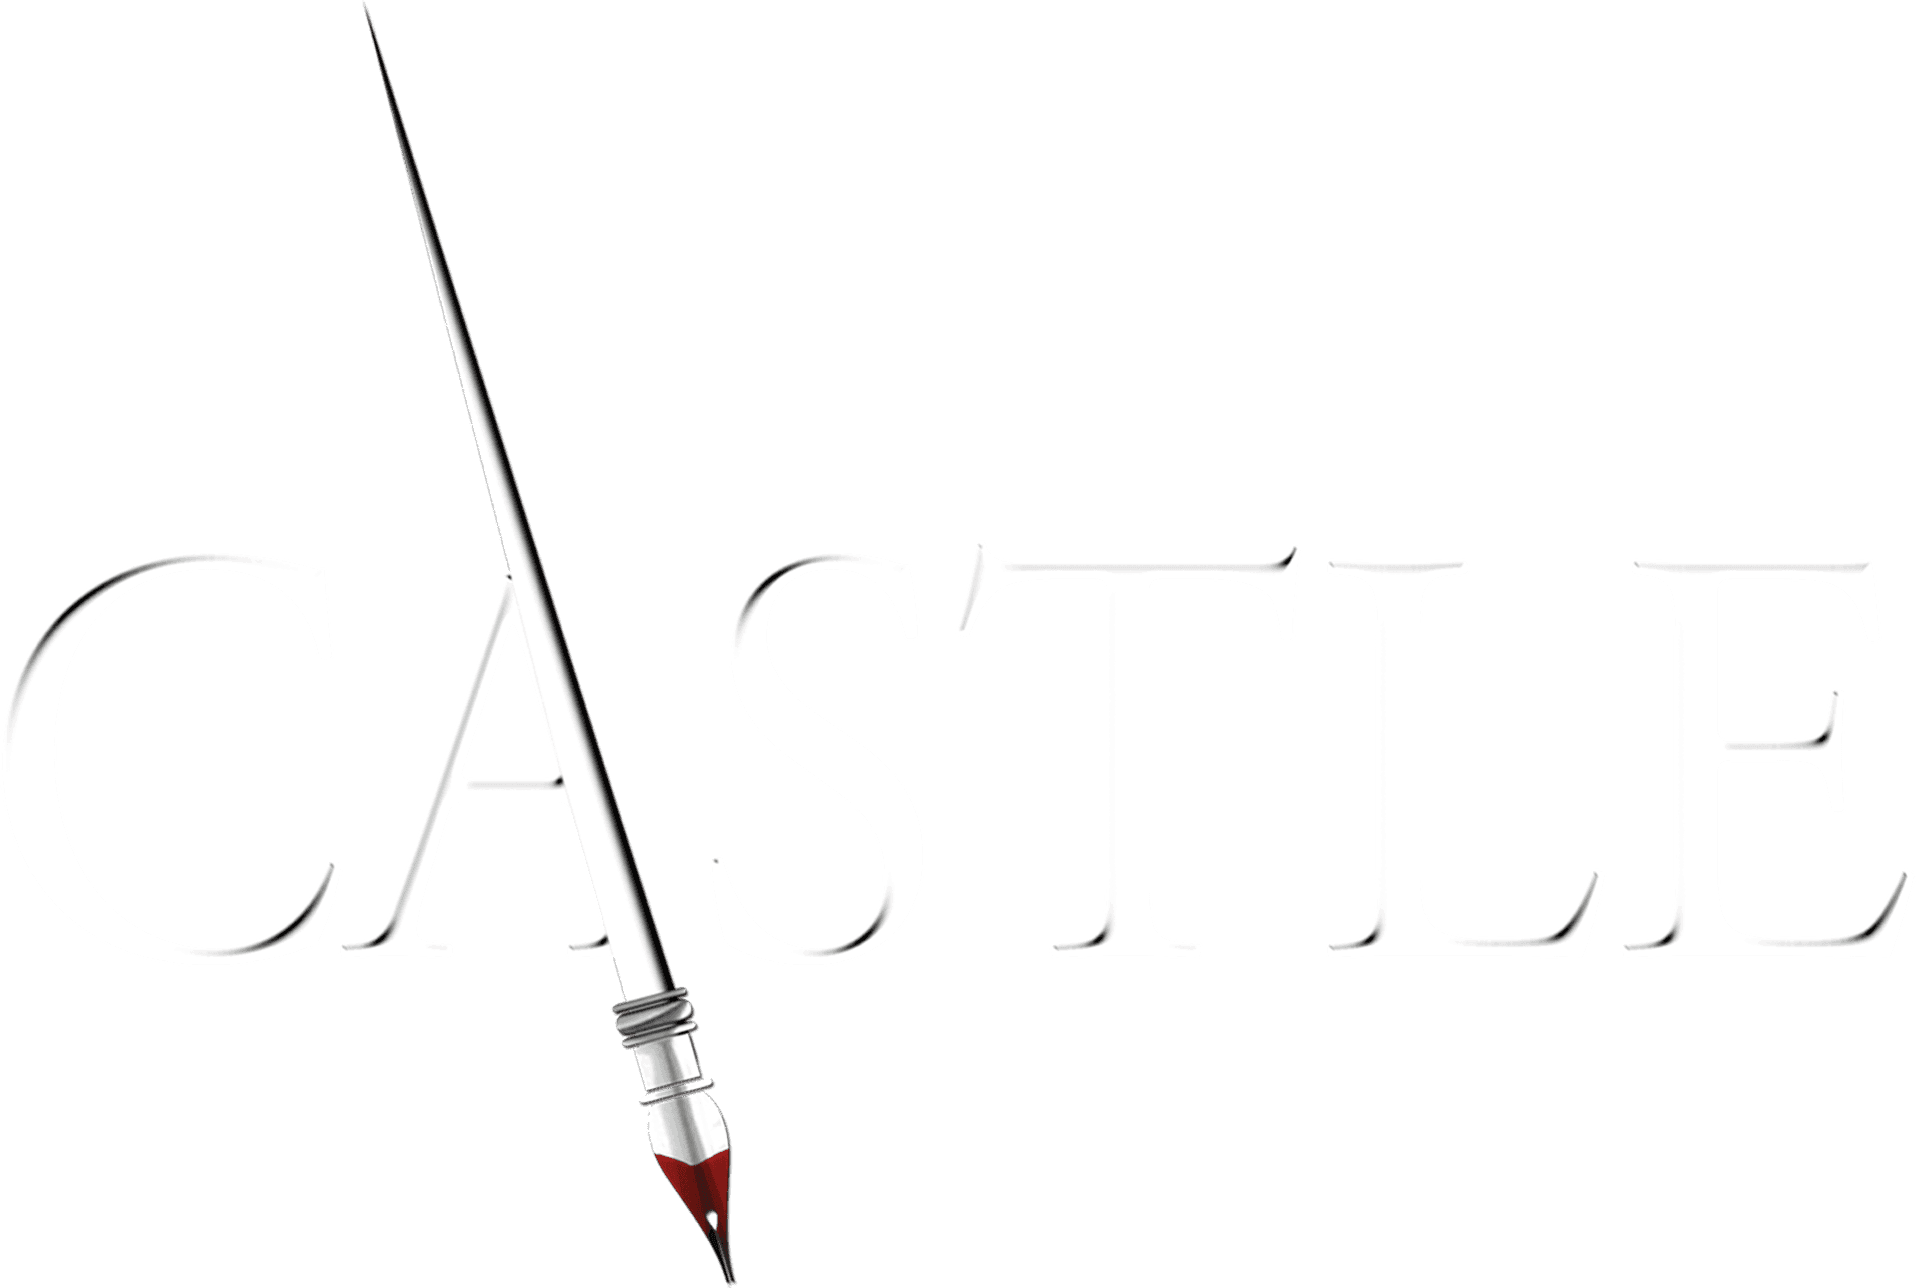 Castle logo